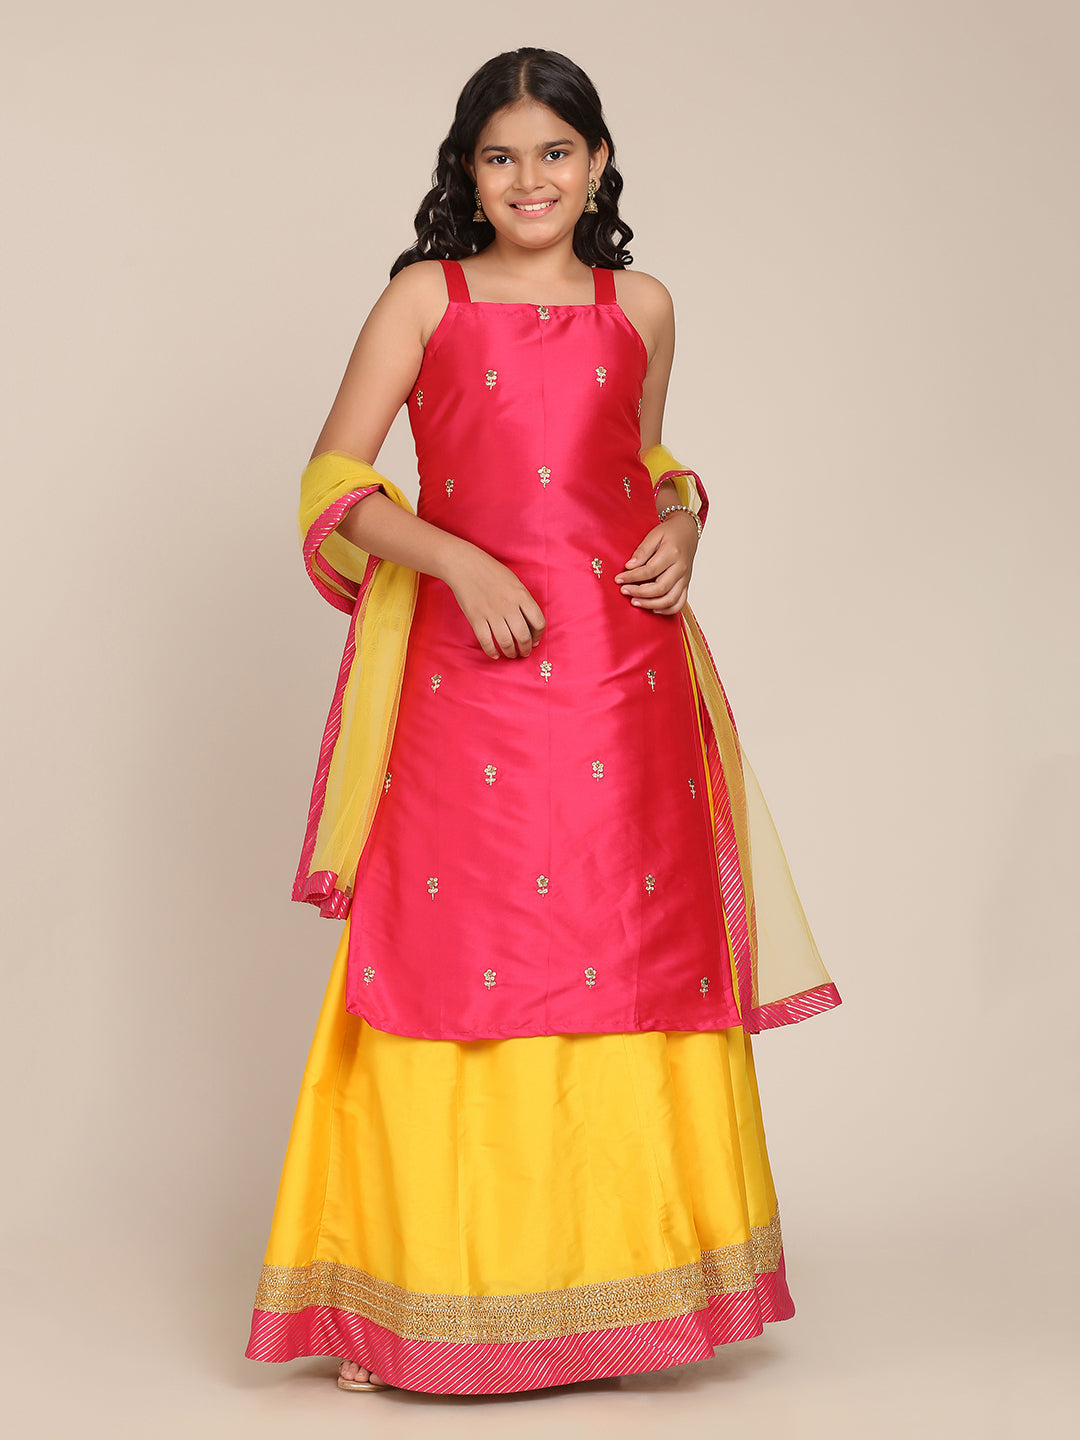 Bitiya By Bhama Girls Pink & Yellow Embroidered Ready To Wear Lehenga & Blouse With Dupatta